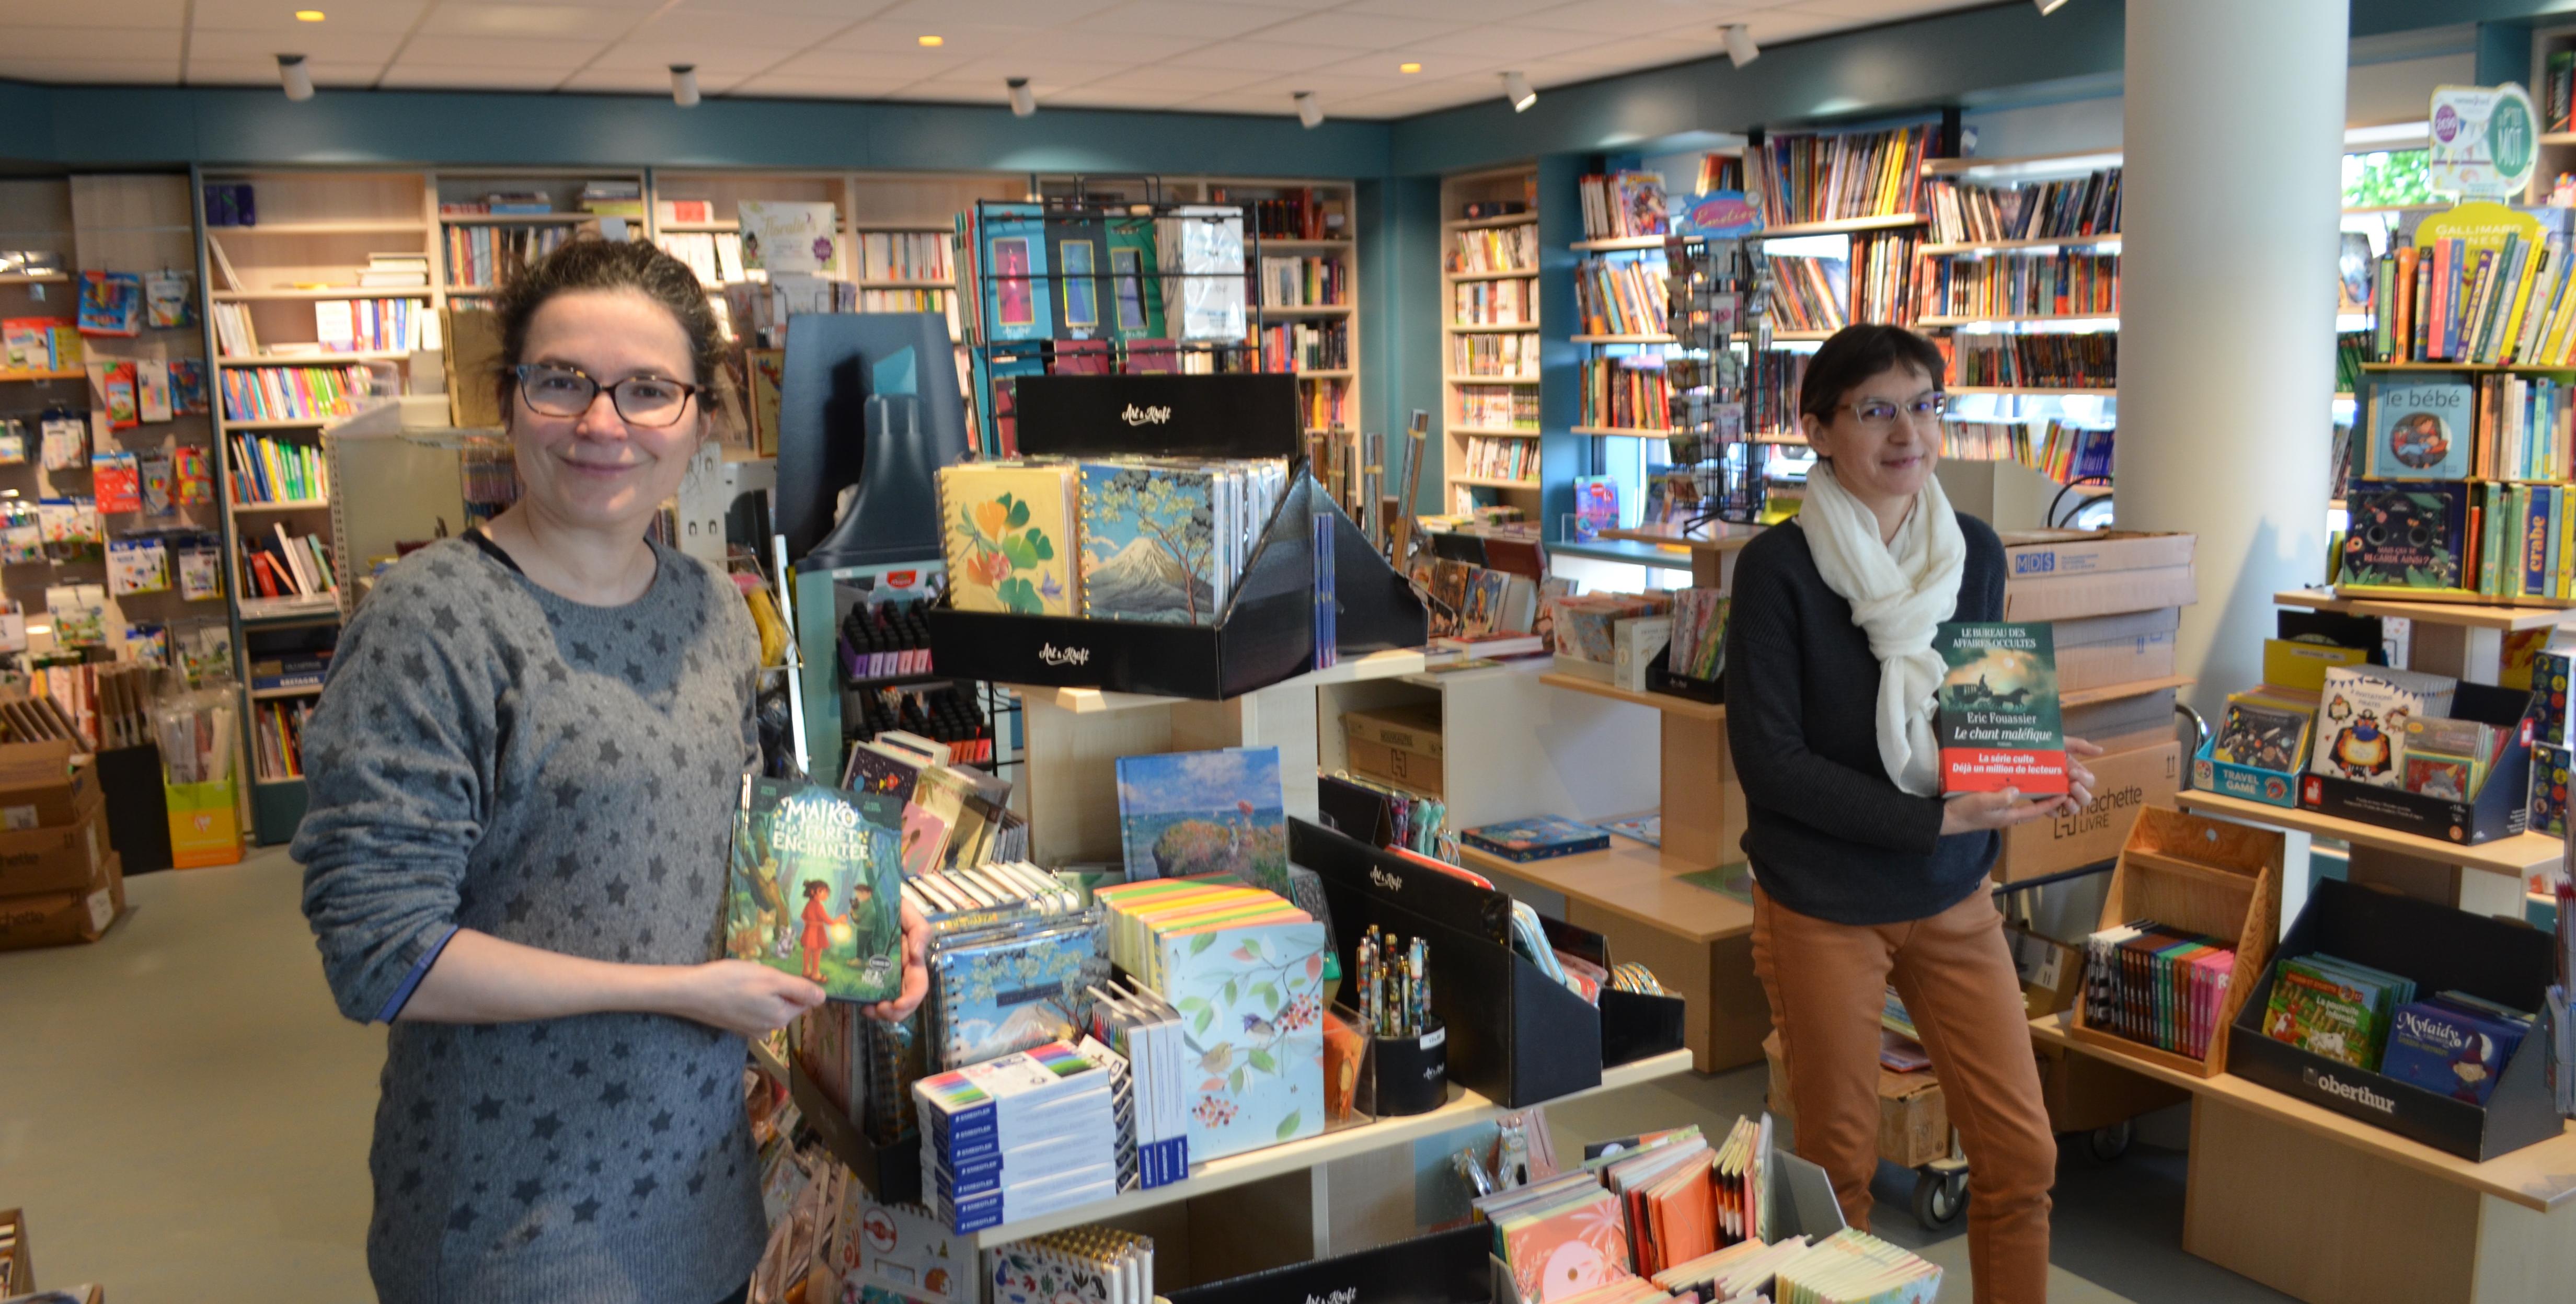 "Alfabulle", librairie kid's friendly au nord de Rennes